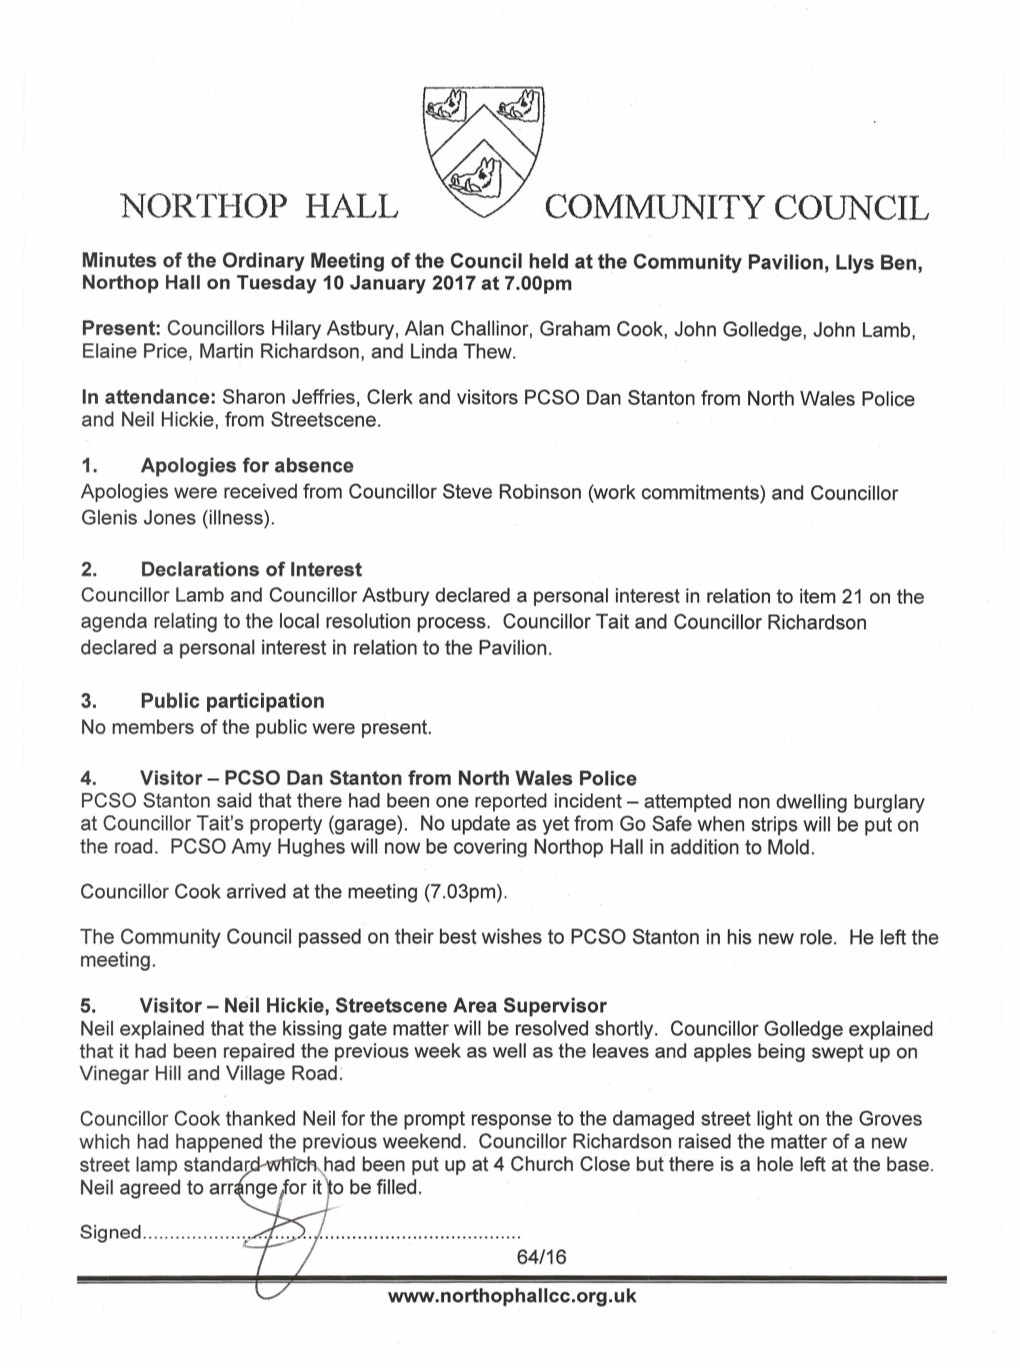 Northop Hall Community Council